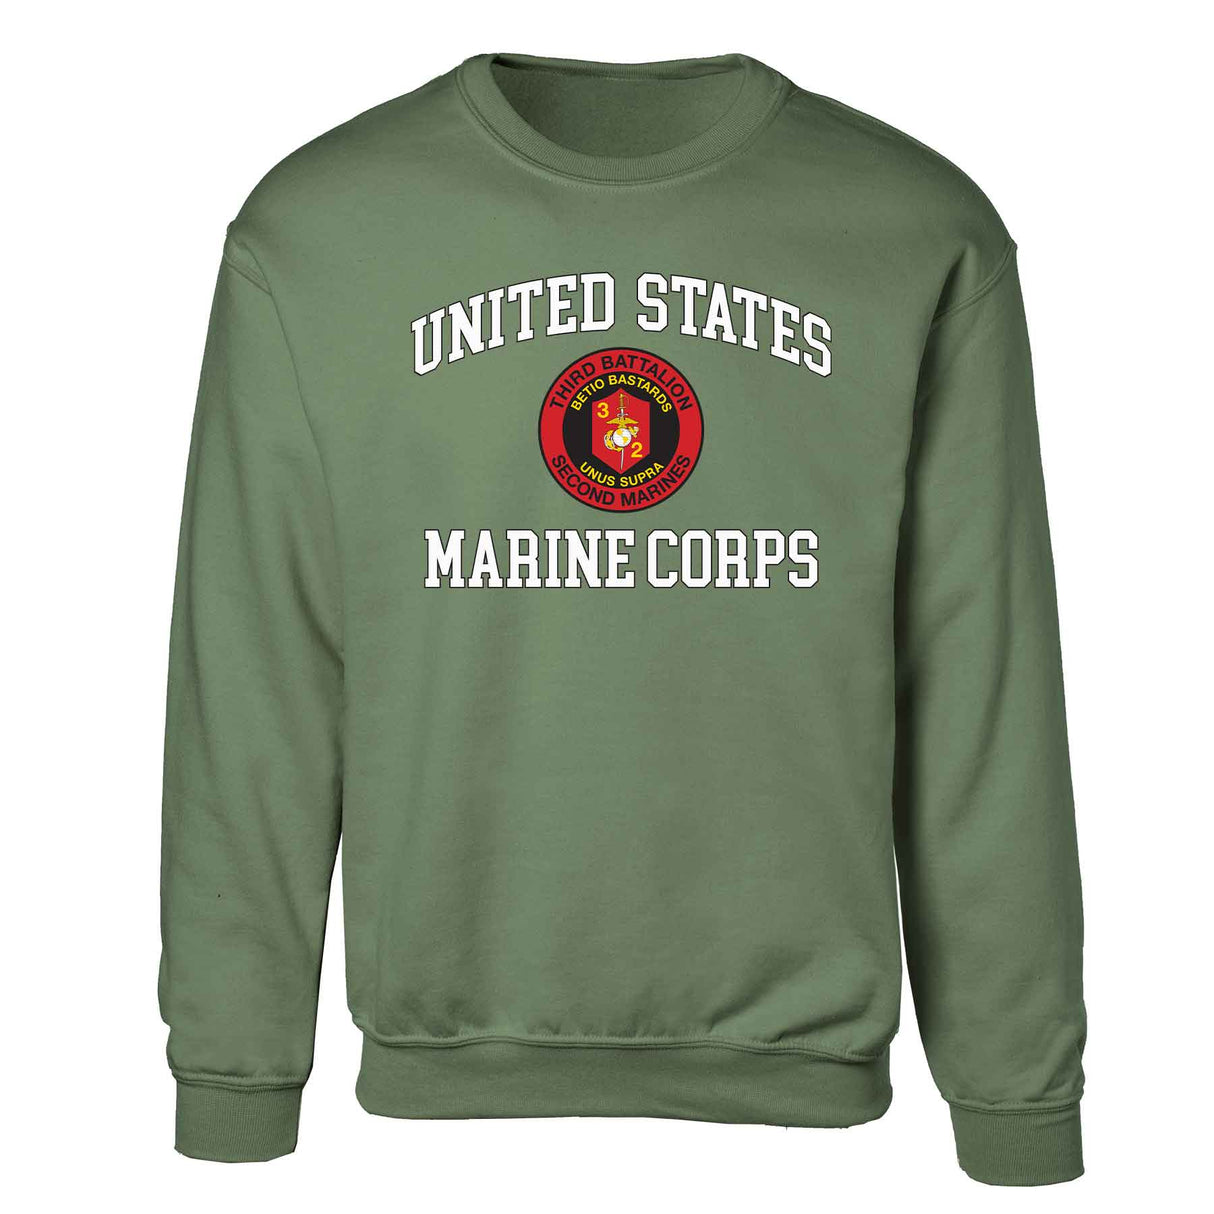 3rd Battalion 2nd Marines USMC Sweatshirt - SGT GRIT